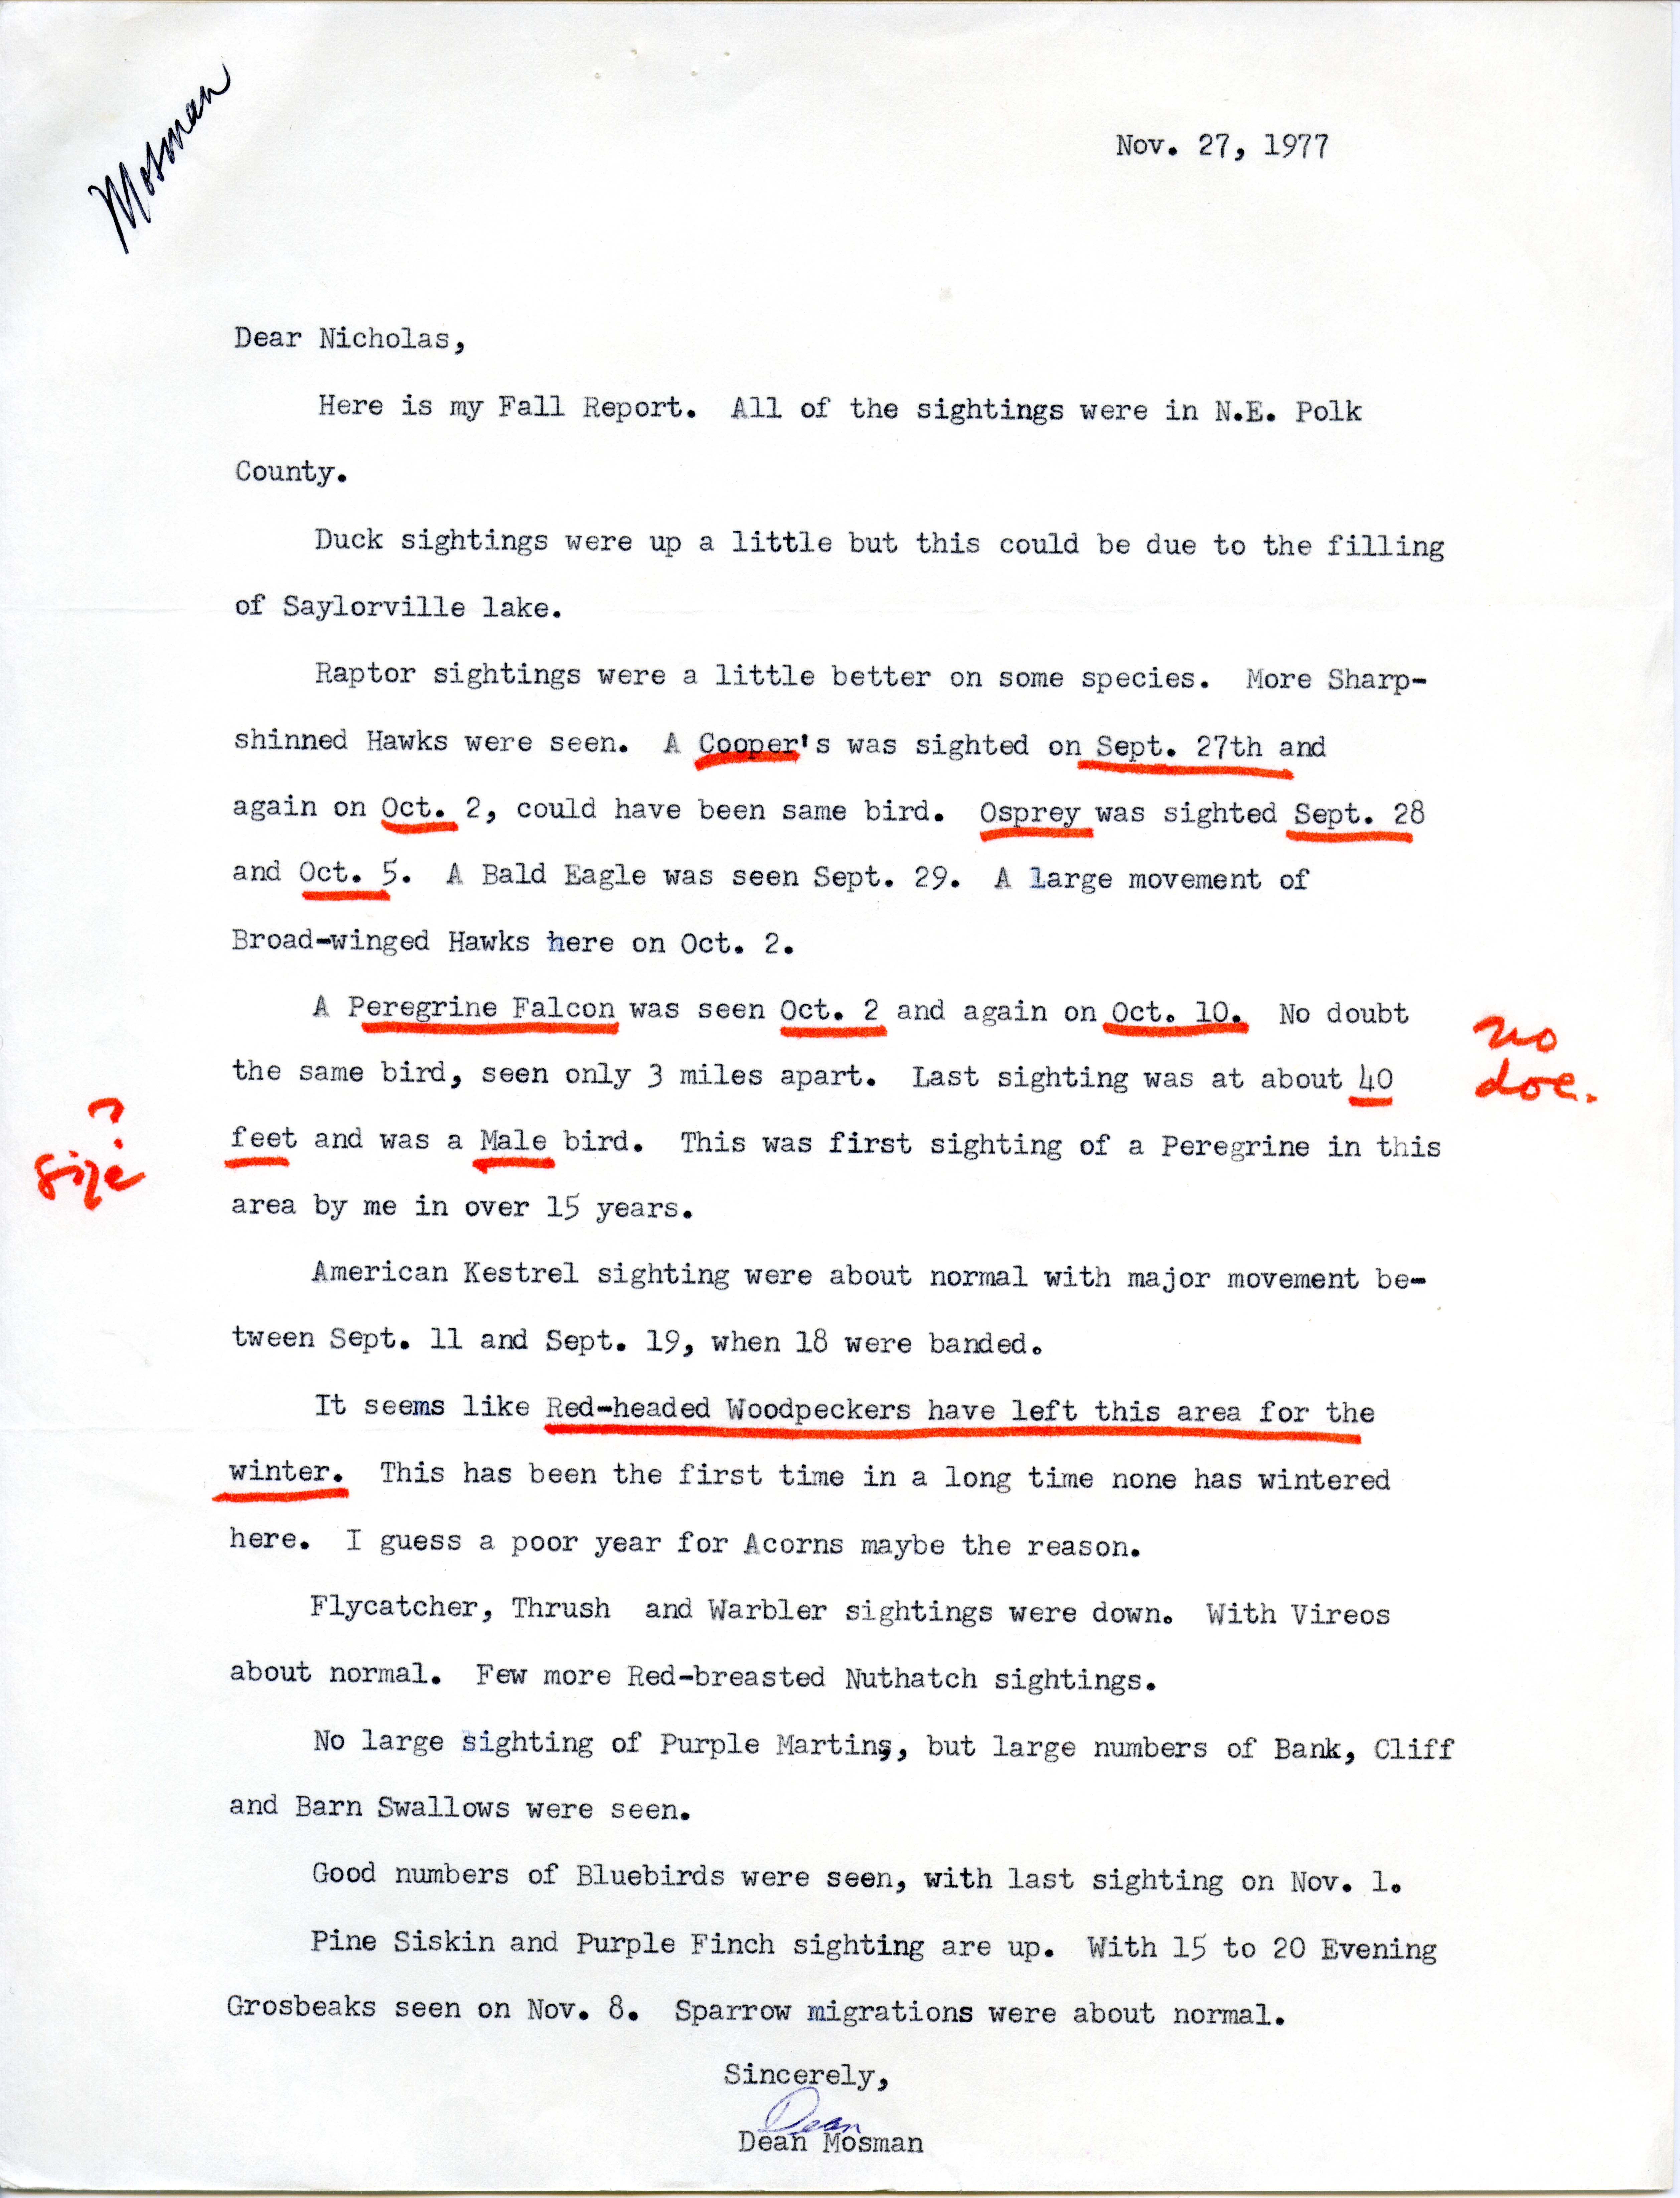 Dean Mosman letter to Nicholas S. Halmi regarding bird sightings, November 27, 1977